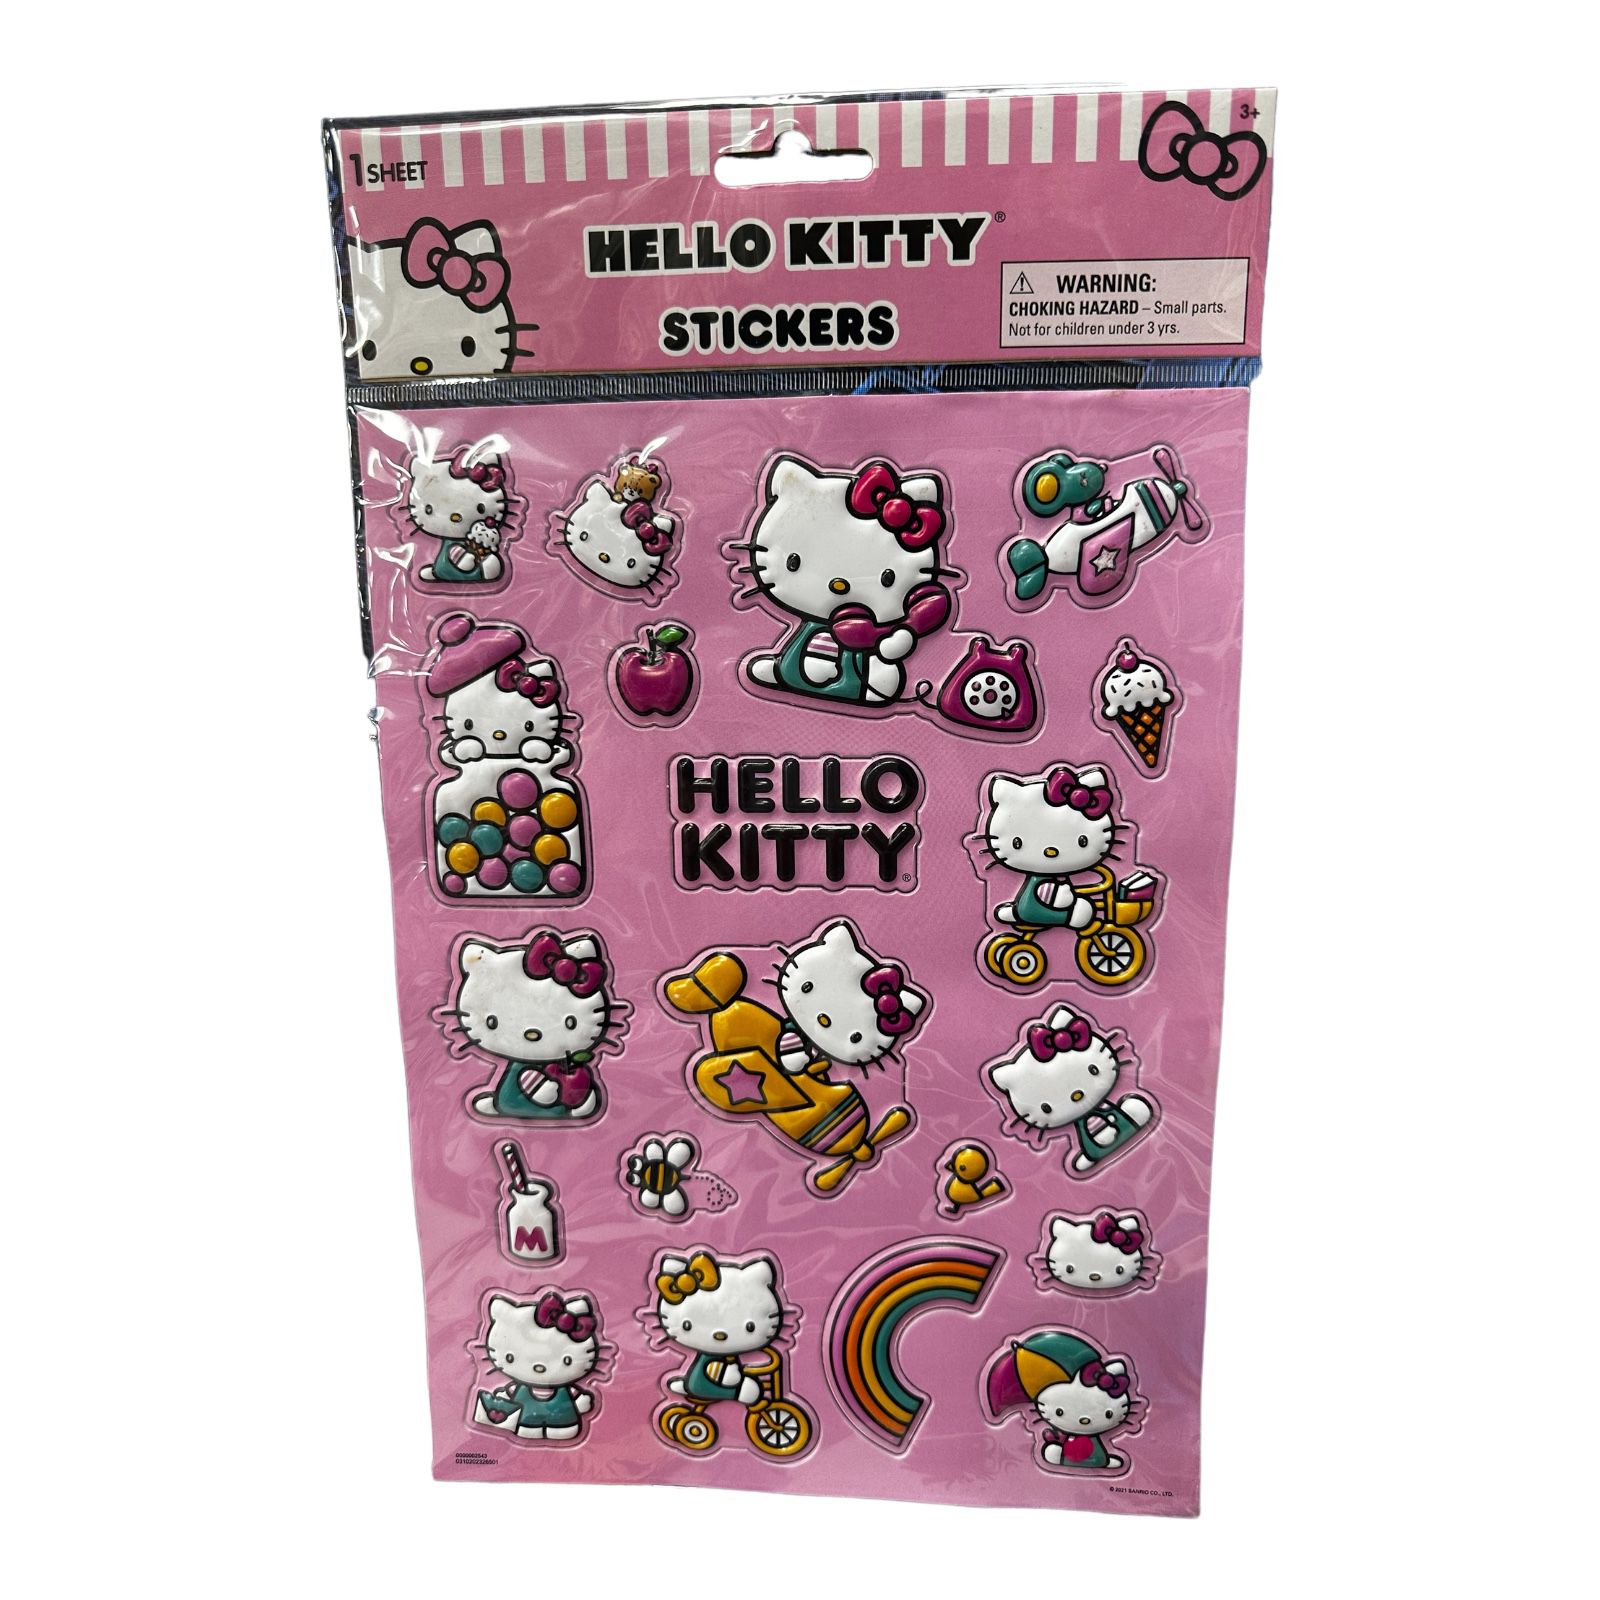 Hello kitty Stickers